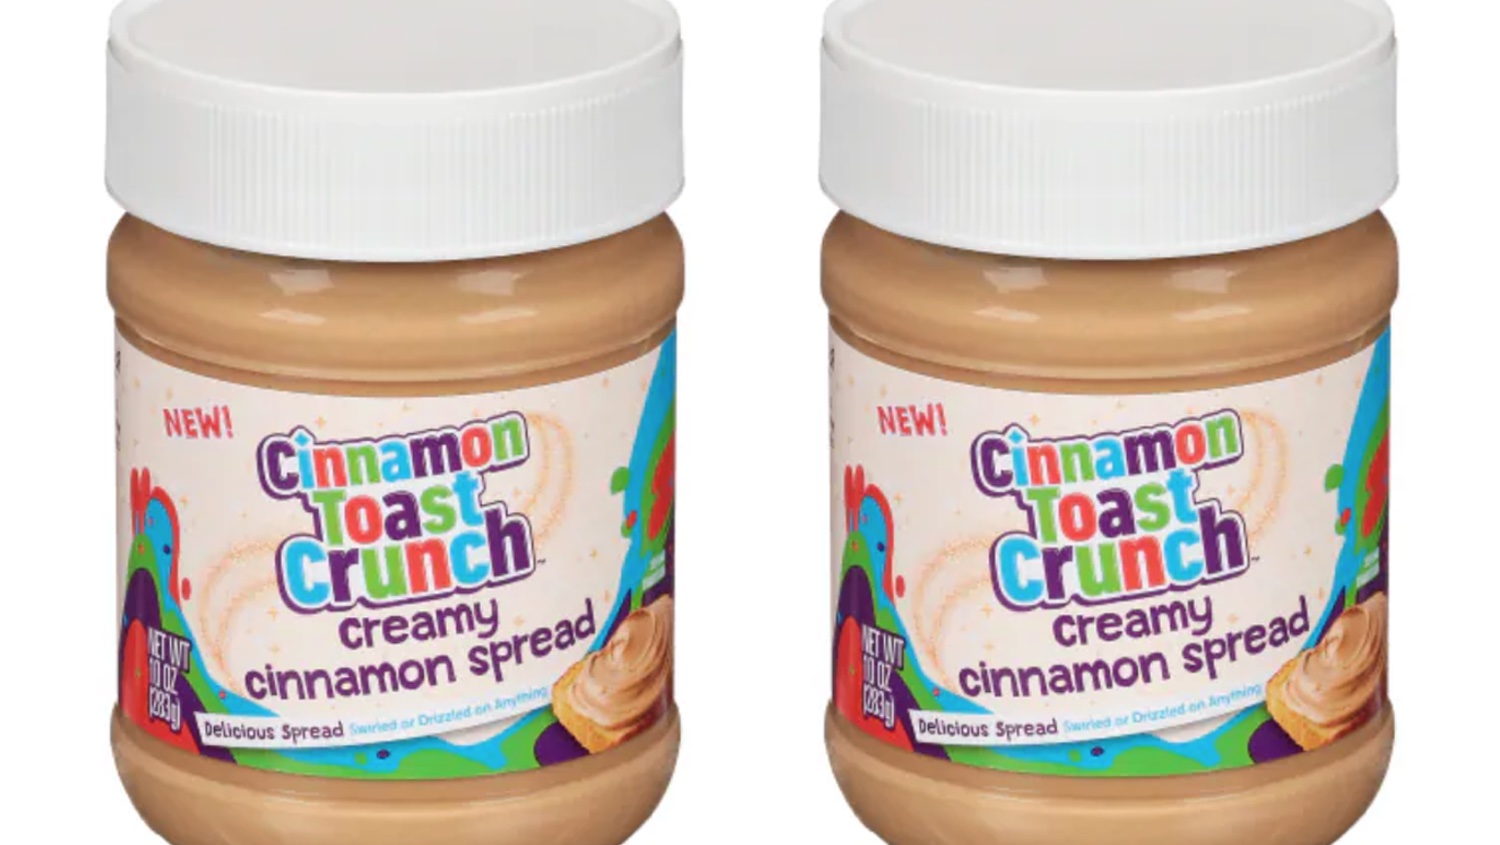 Cinnamon Toast Crunch creamy spread